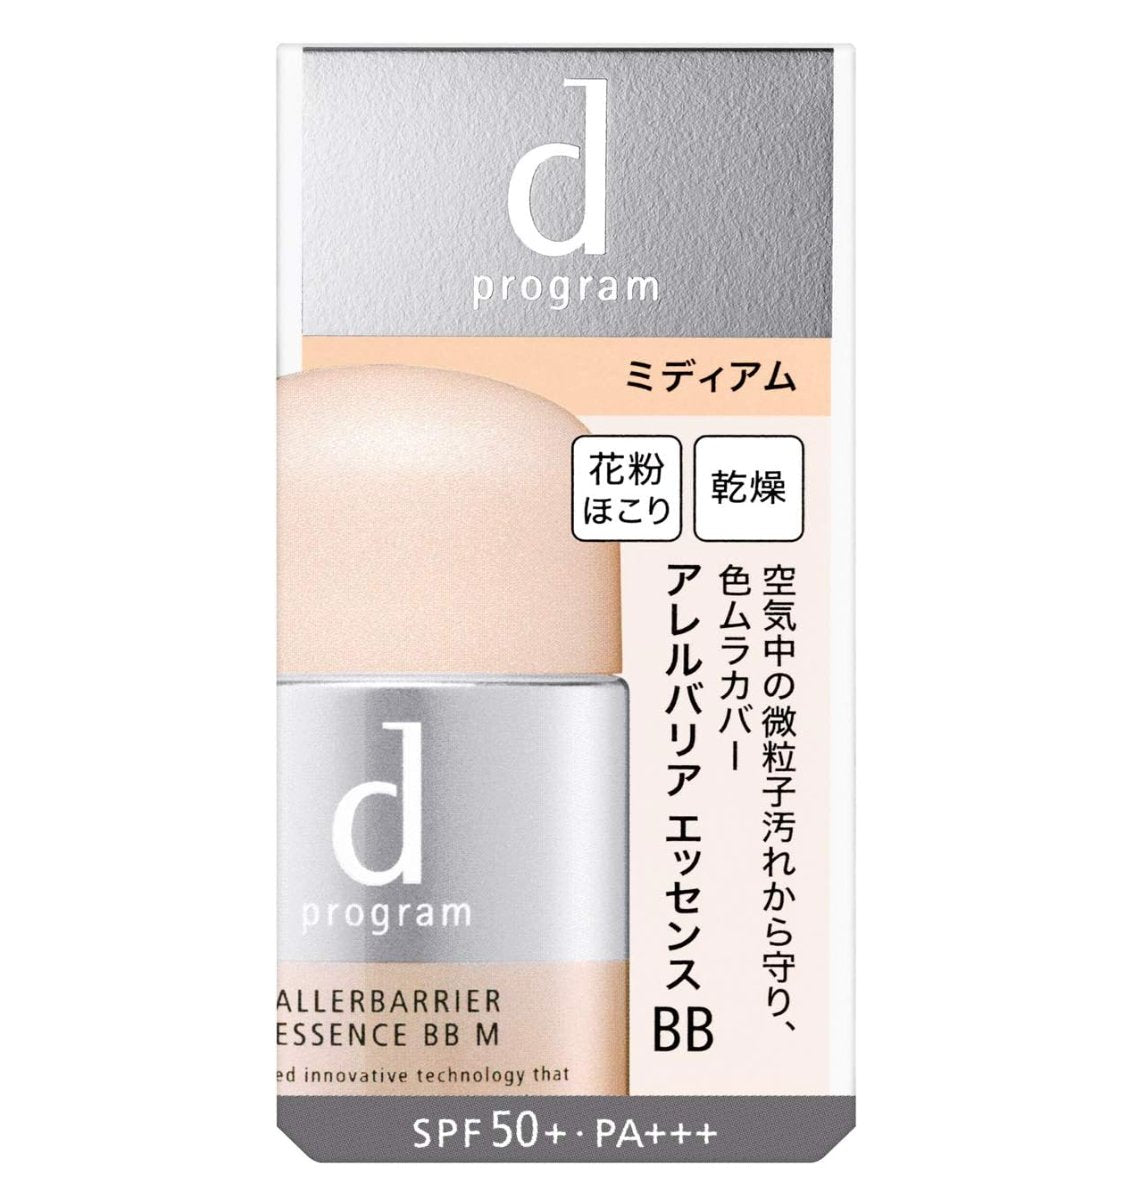 d program Allerbarrier Essence BB N Medium Makeup Foundation Unscented 30 ml - YOYO JAPAN